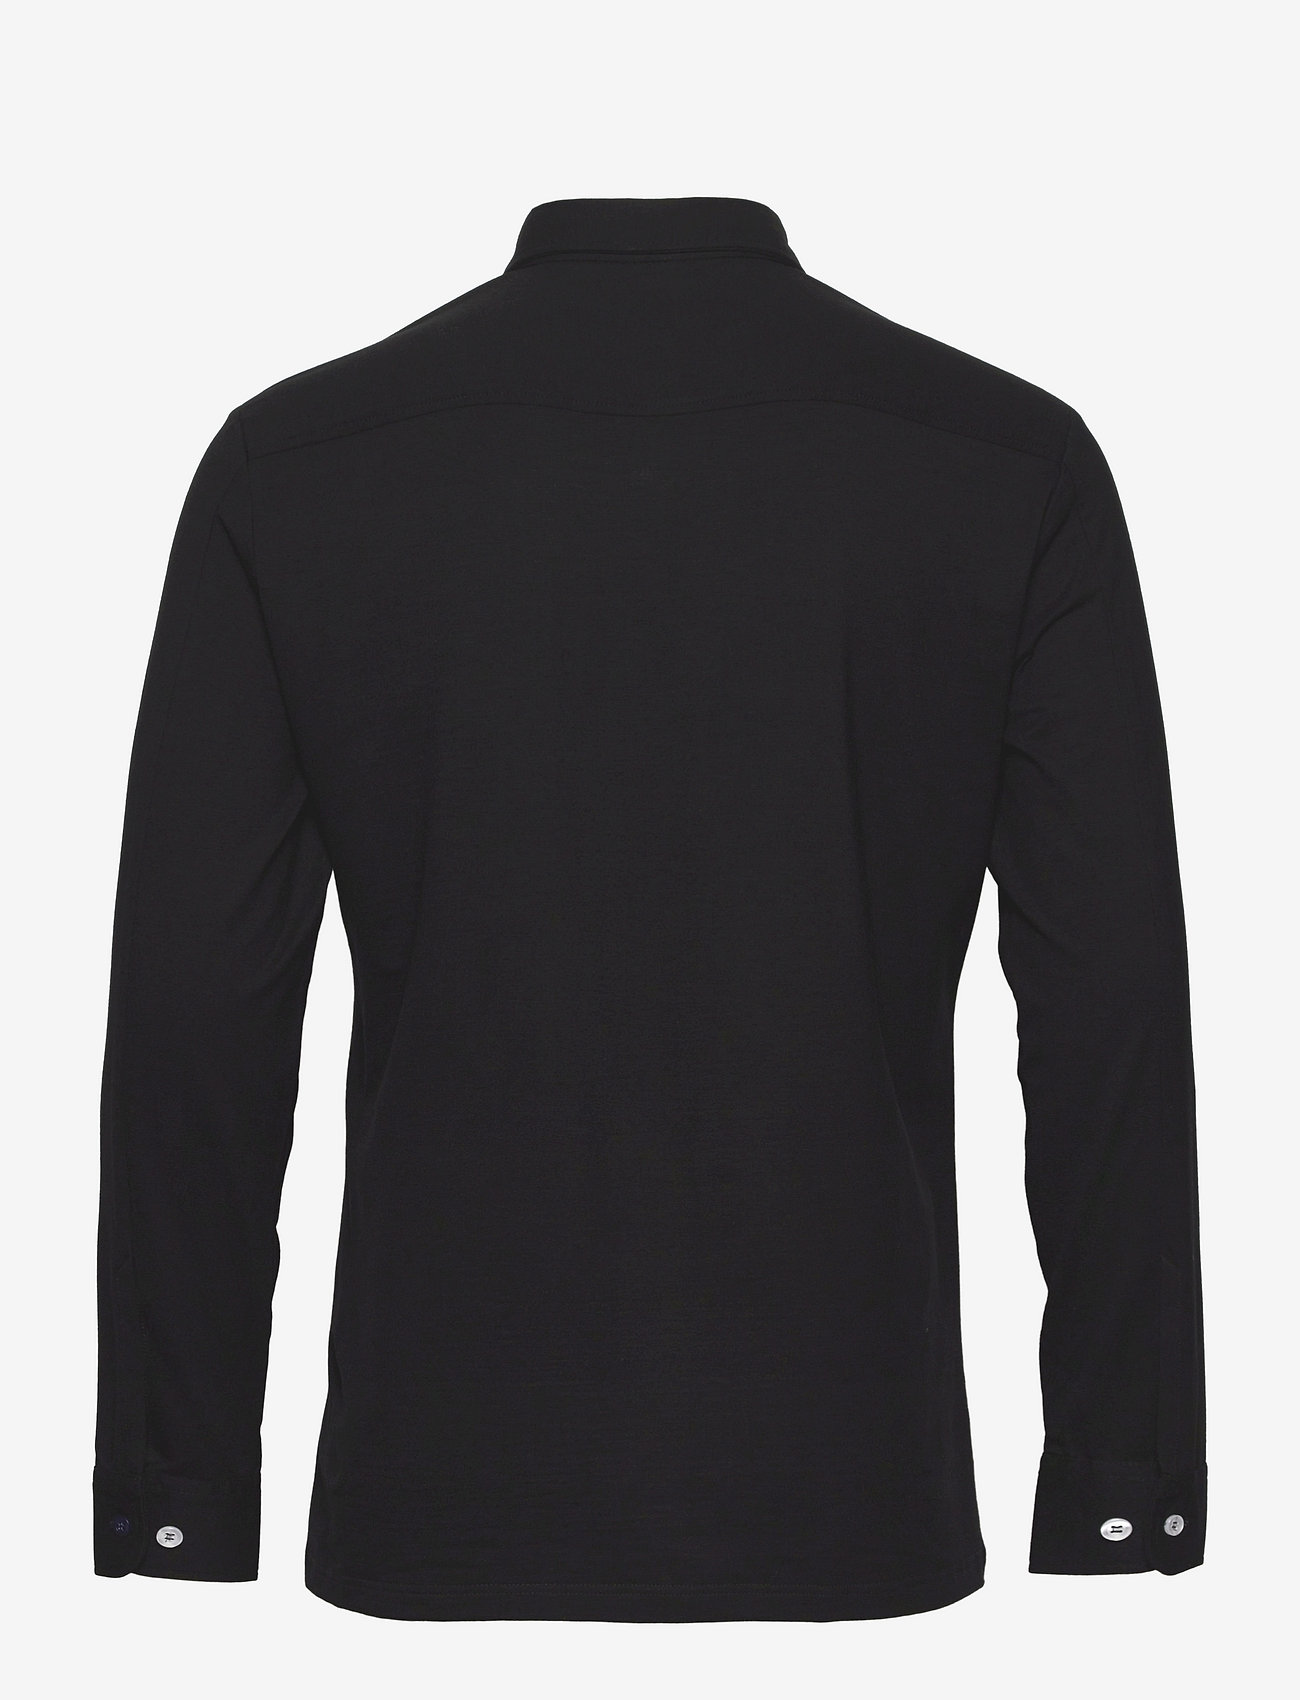 FRENN - Hemmo Bamboo Viscose Jersey Shirt - podstawowe koszulki - black - 1